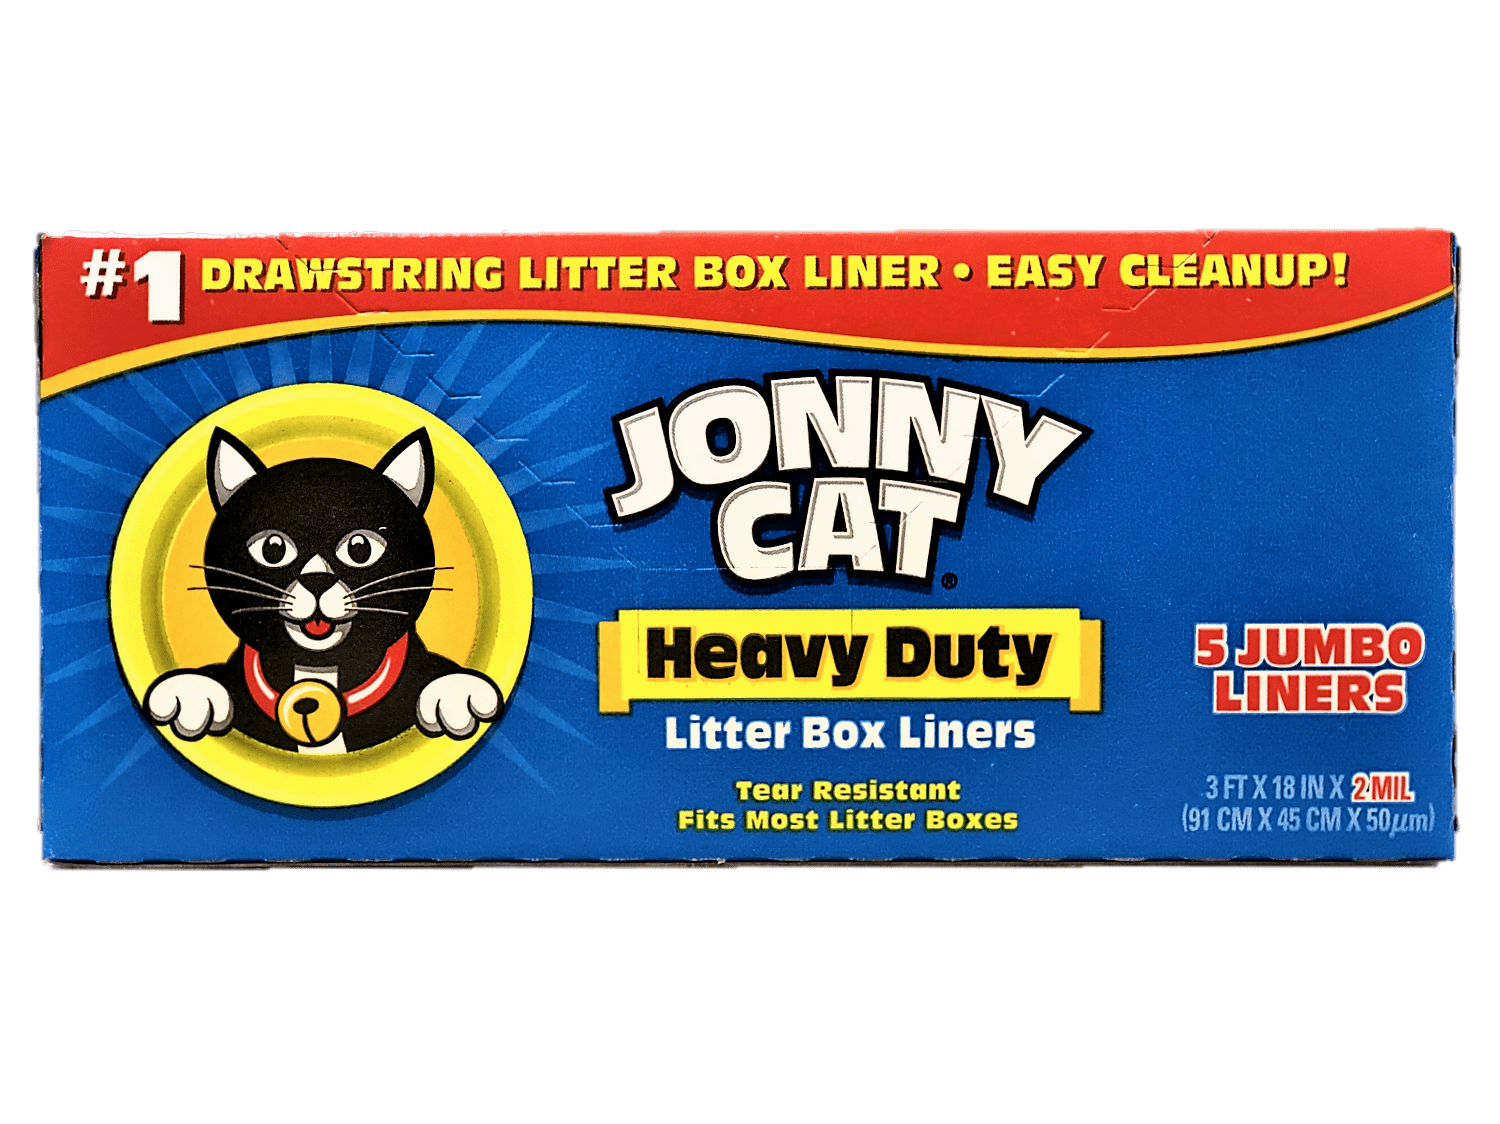 Picture of Oil-Dri 8300345 Jonny Cat Litter Box Liners - Pack of 5